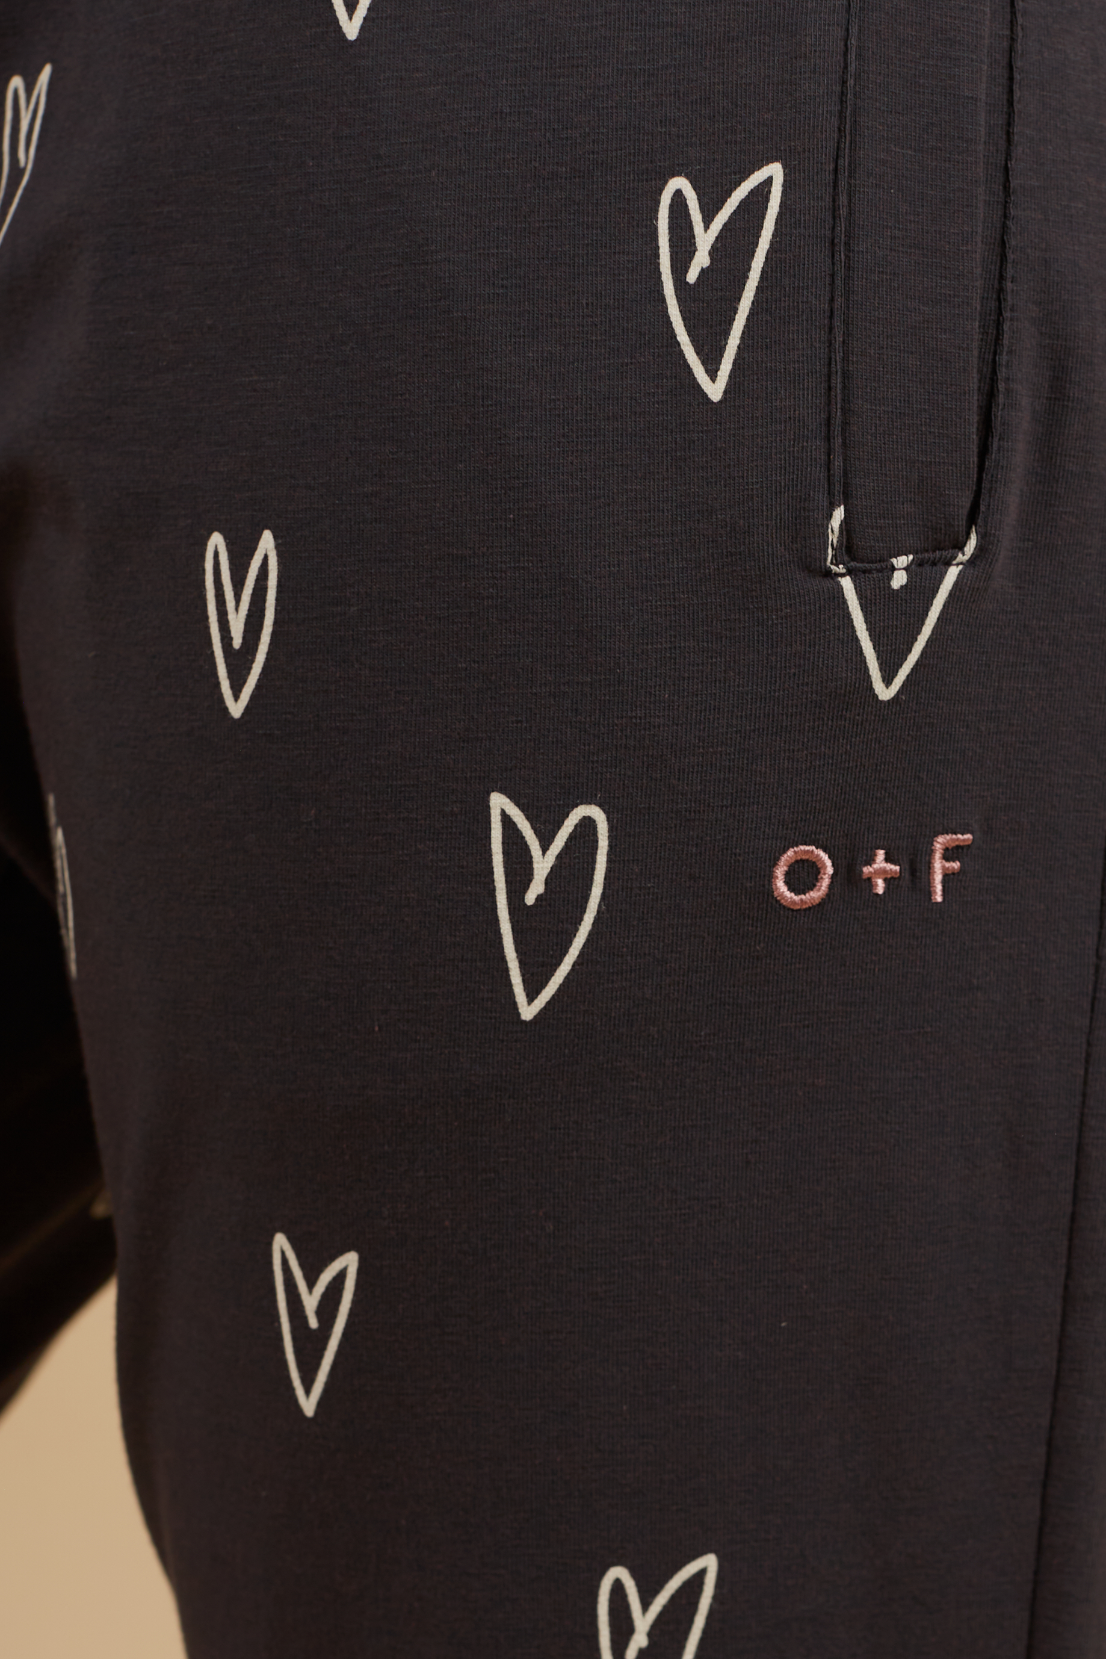 O&F Heart Print Stretch Joggers - Charcoal Grey